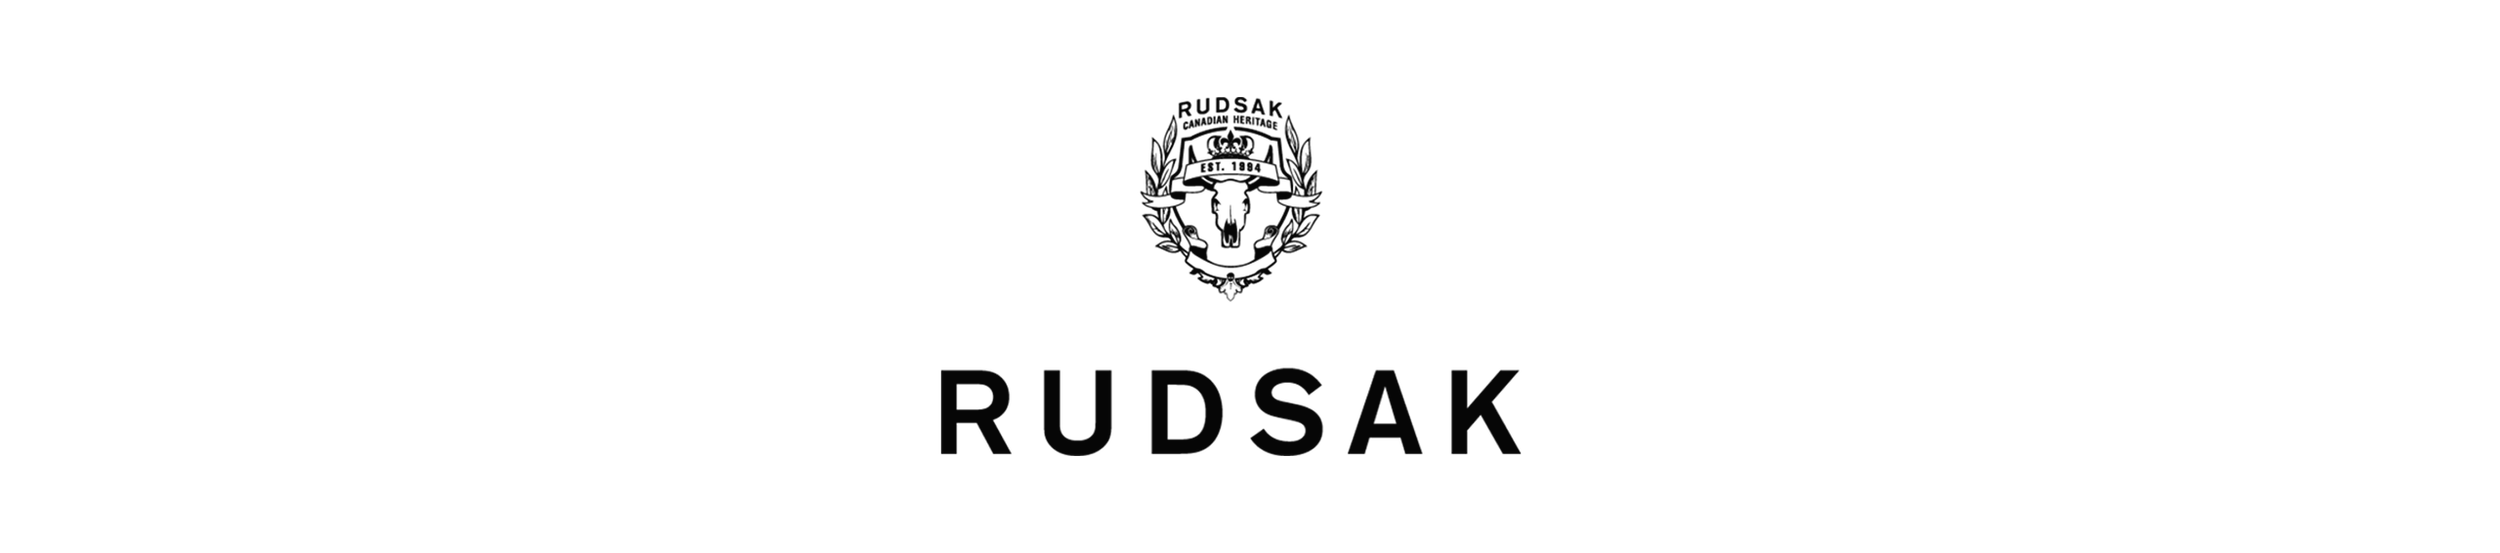 RUDSAK-LOGO.png